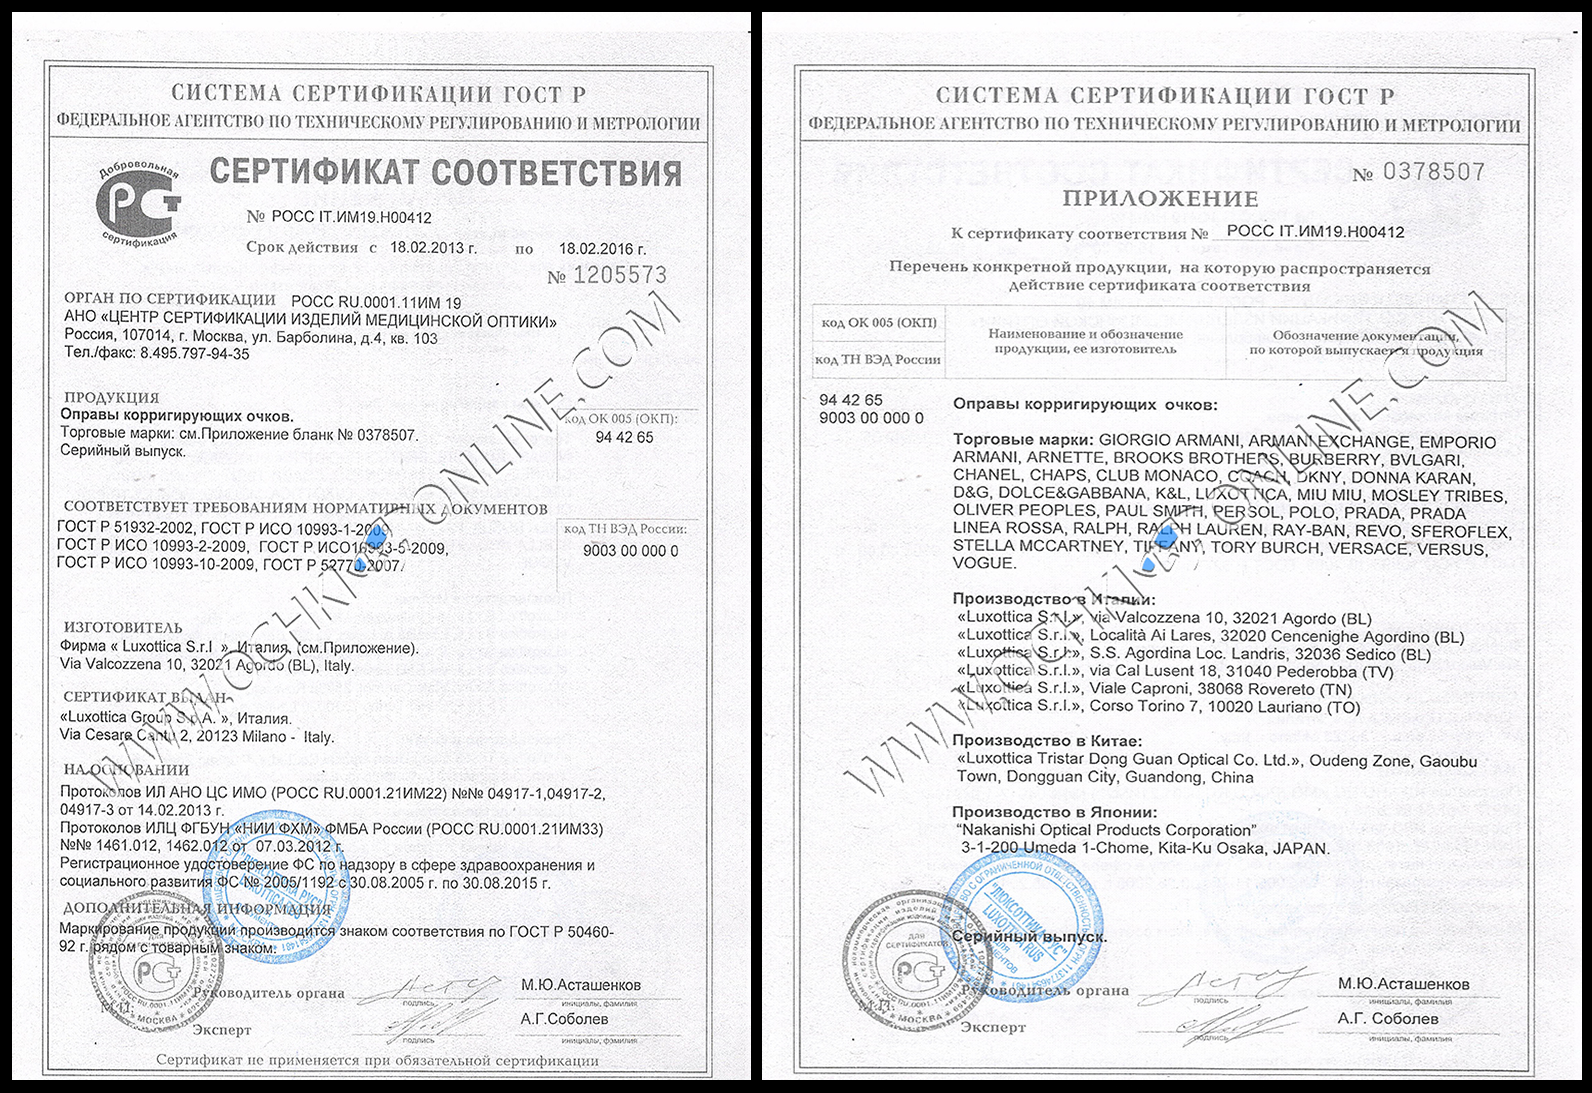 Сертификаты соответствия Luxottica Group S.p.A.